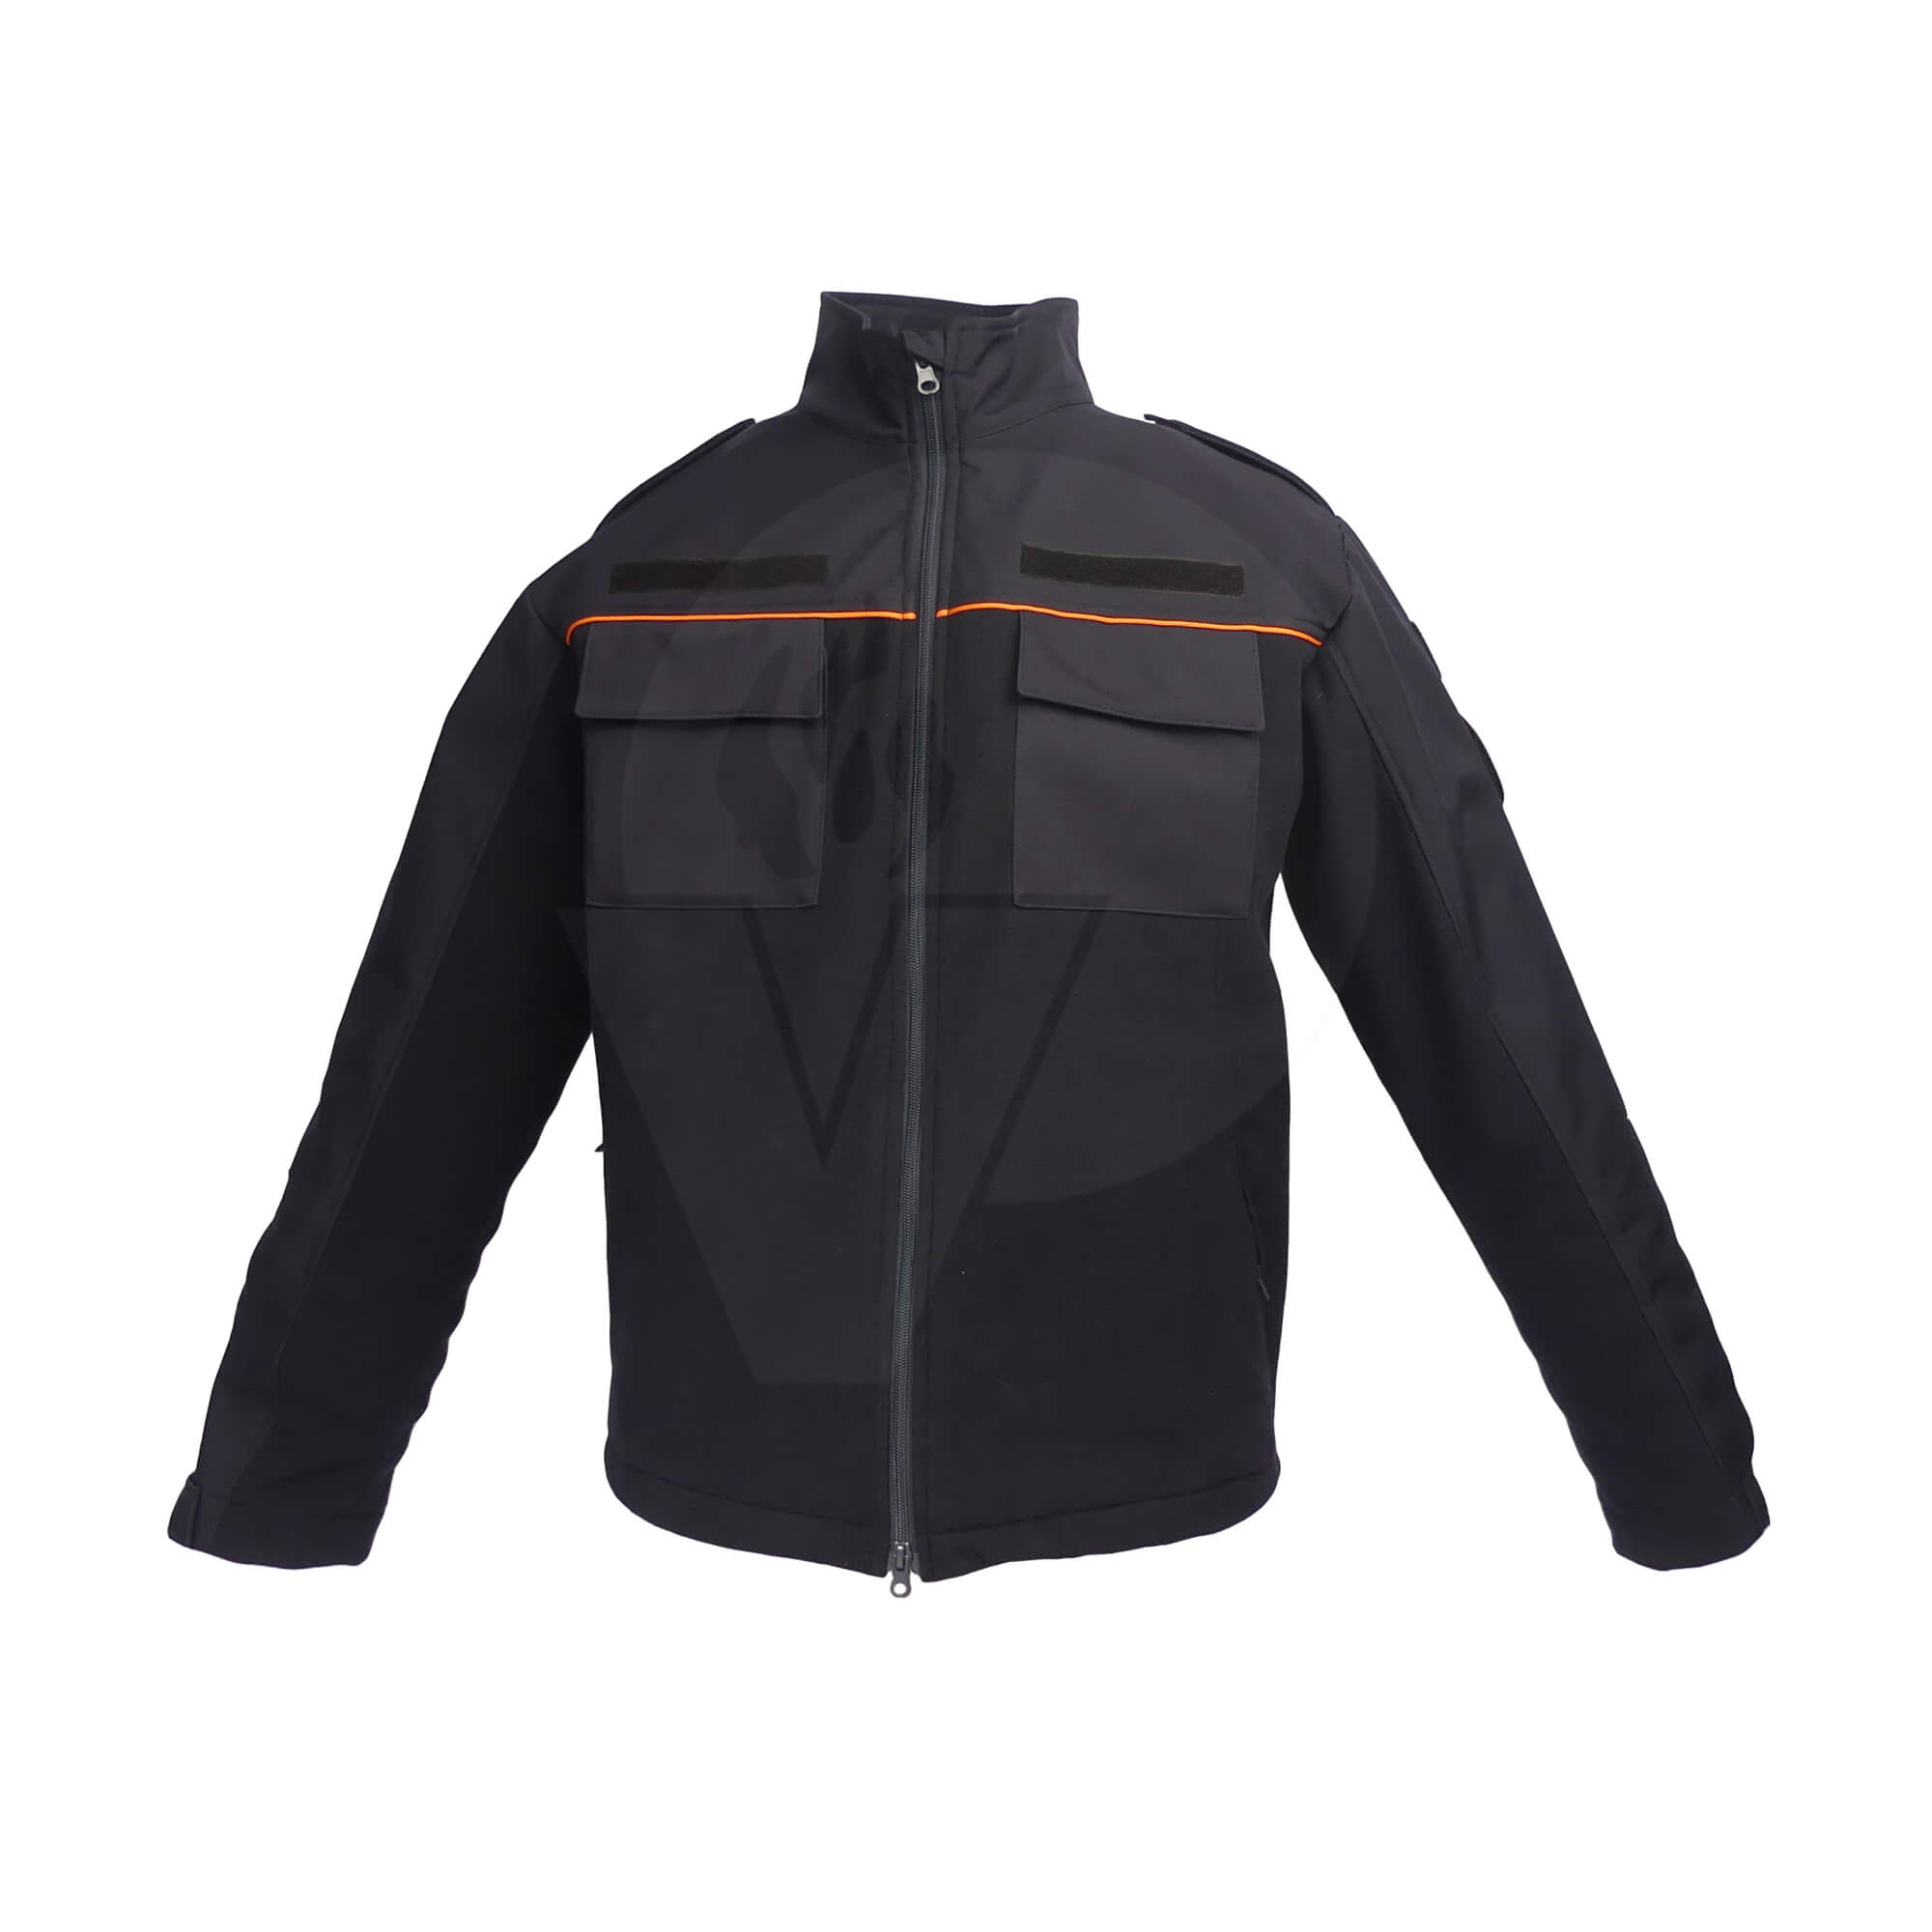 Jacket fleece Windstoper - Civil Protection